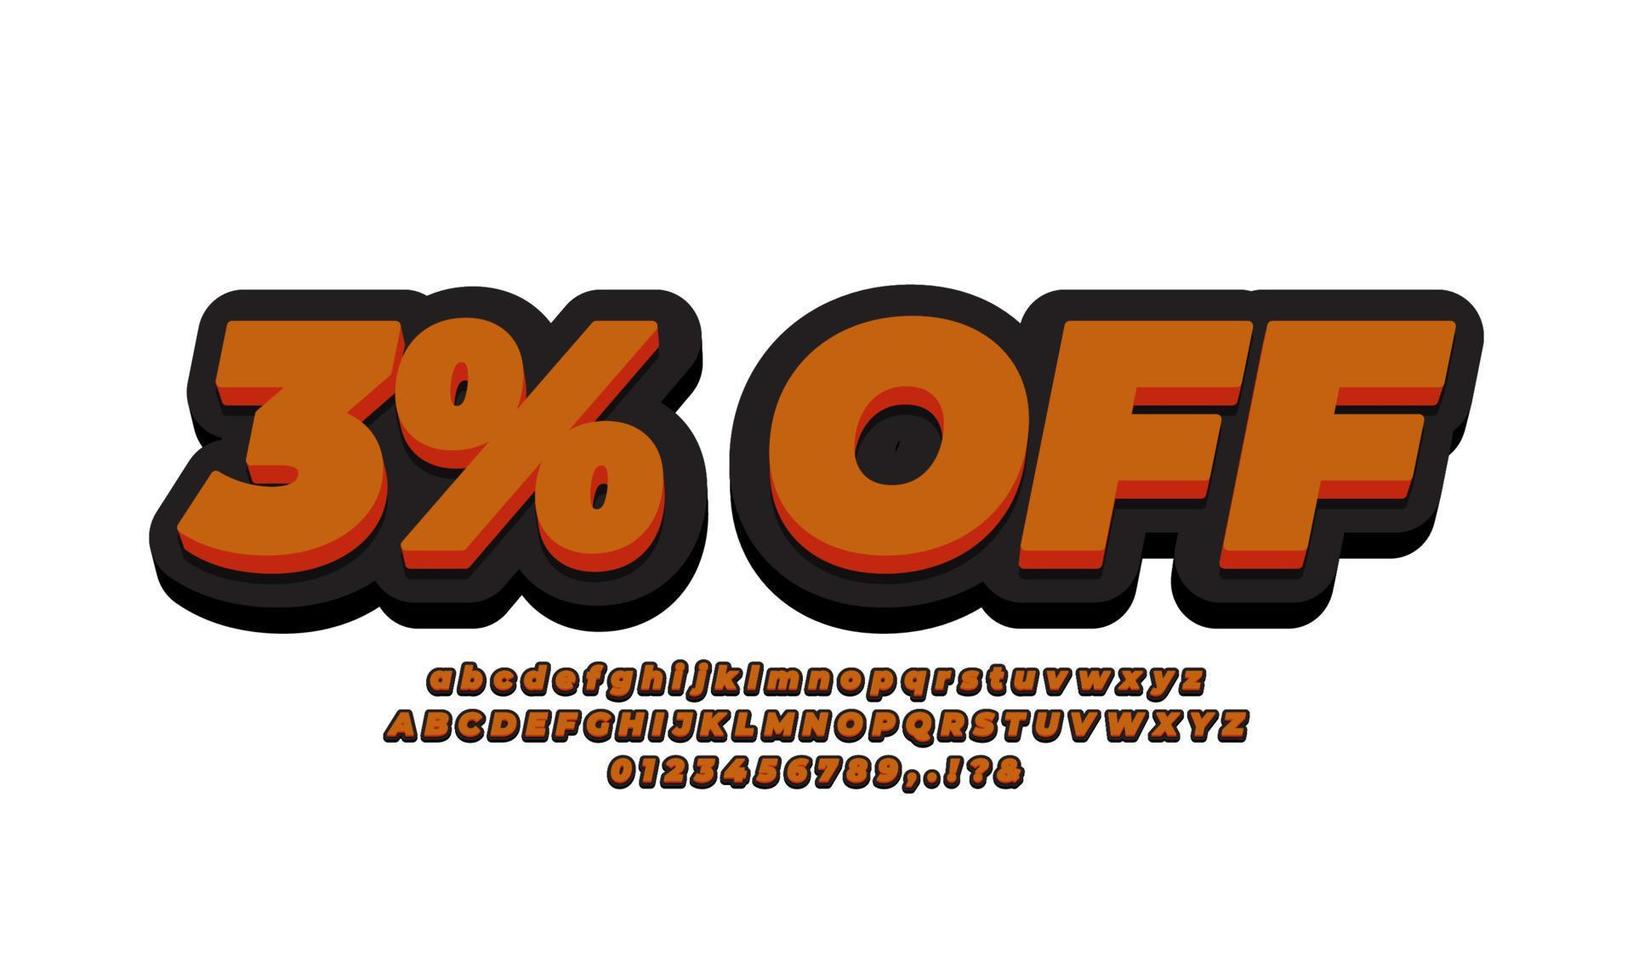 3 percent off sale text 3d  orange  black vector